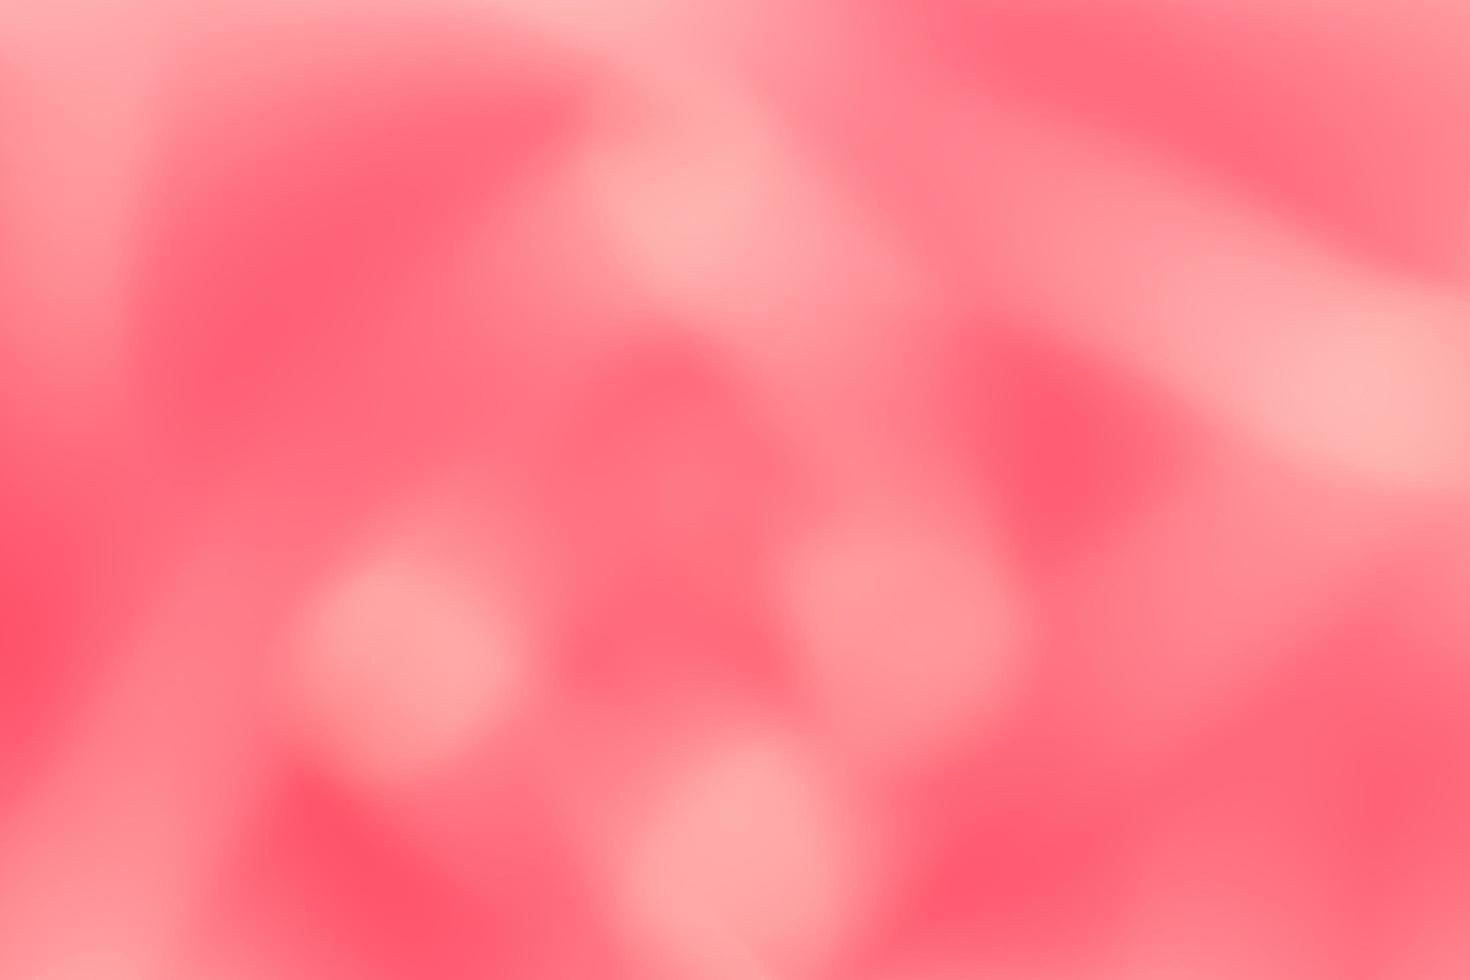 Pink blurred background photo